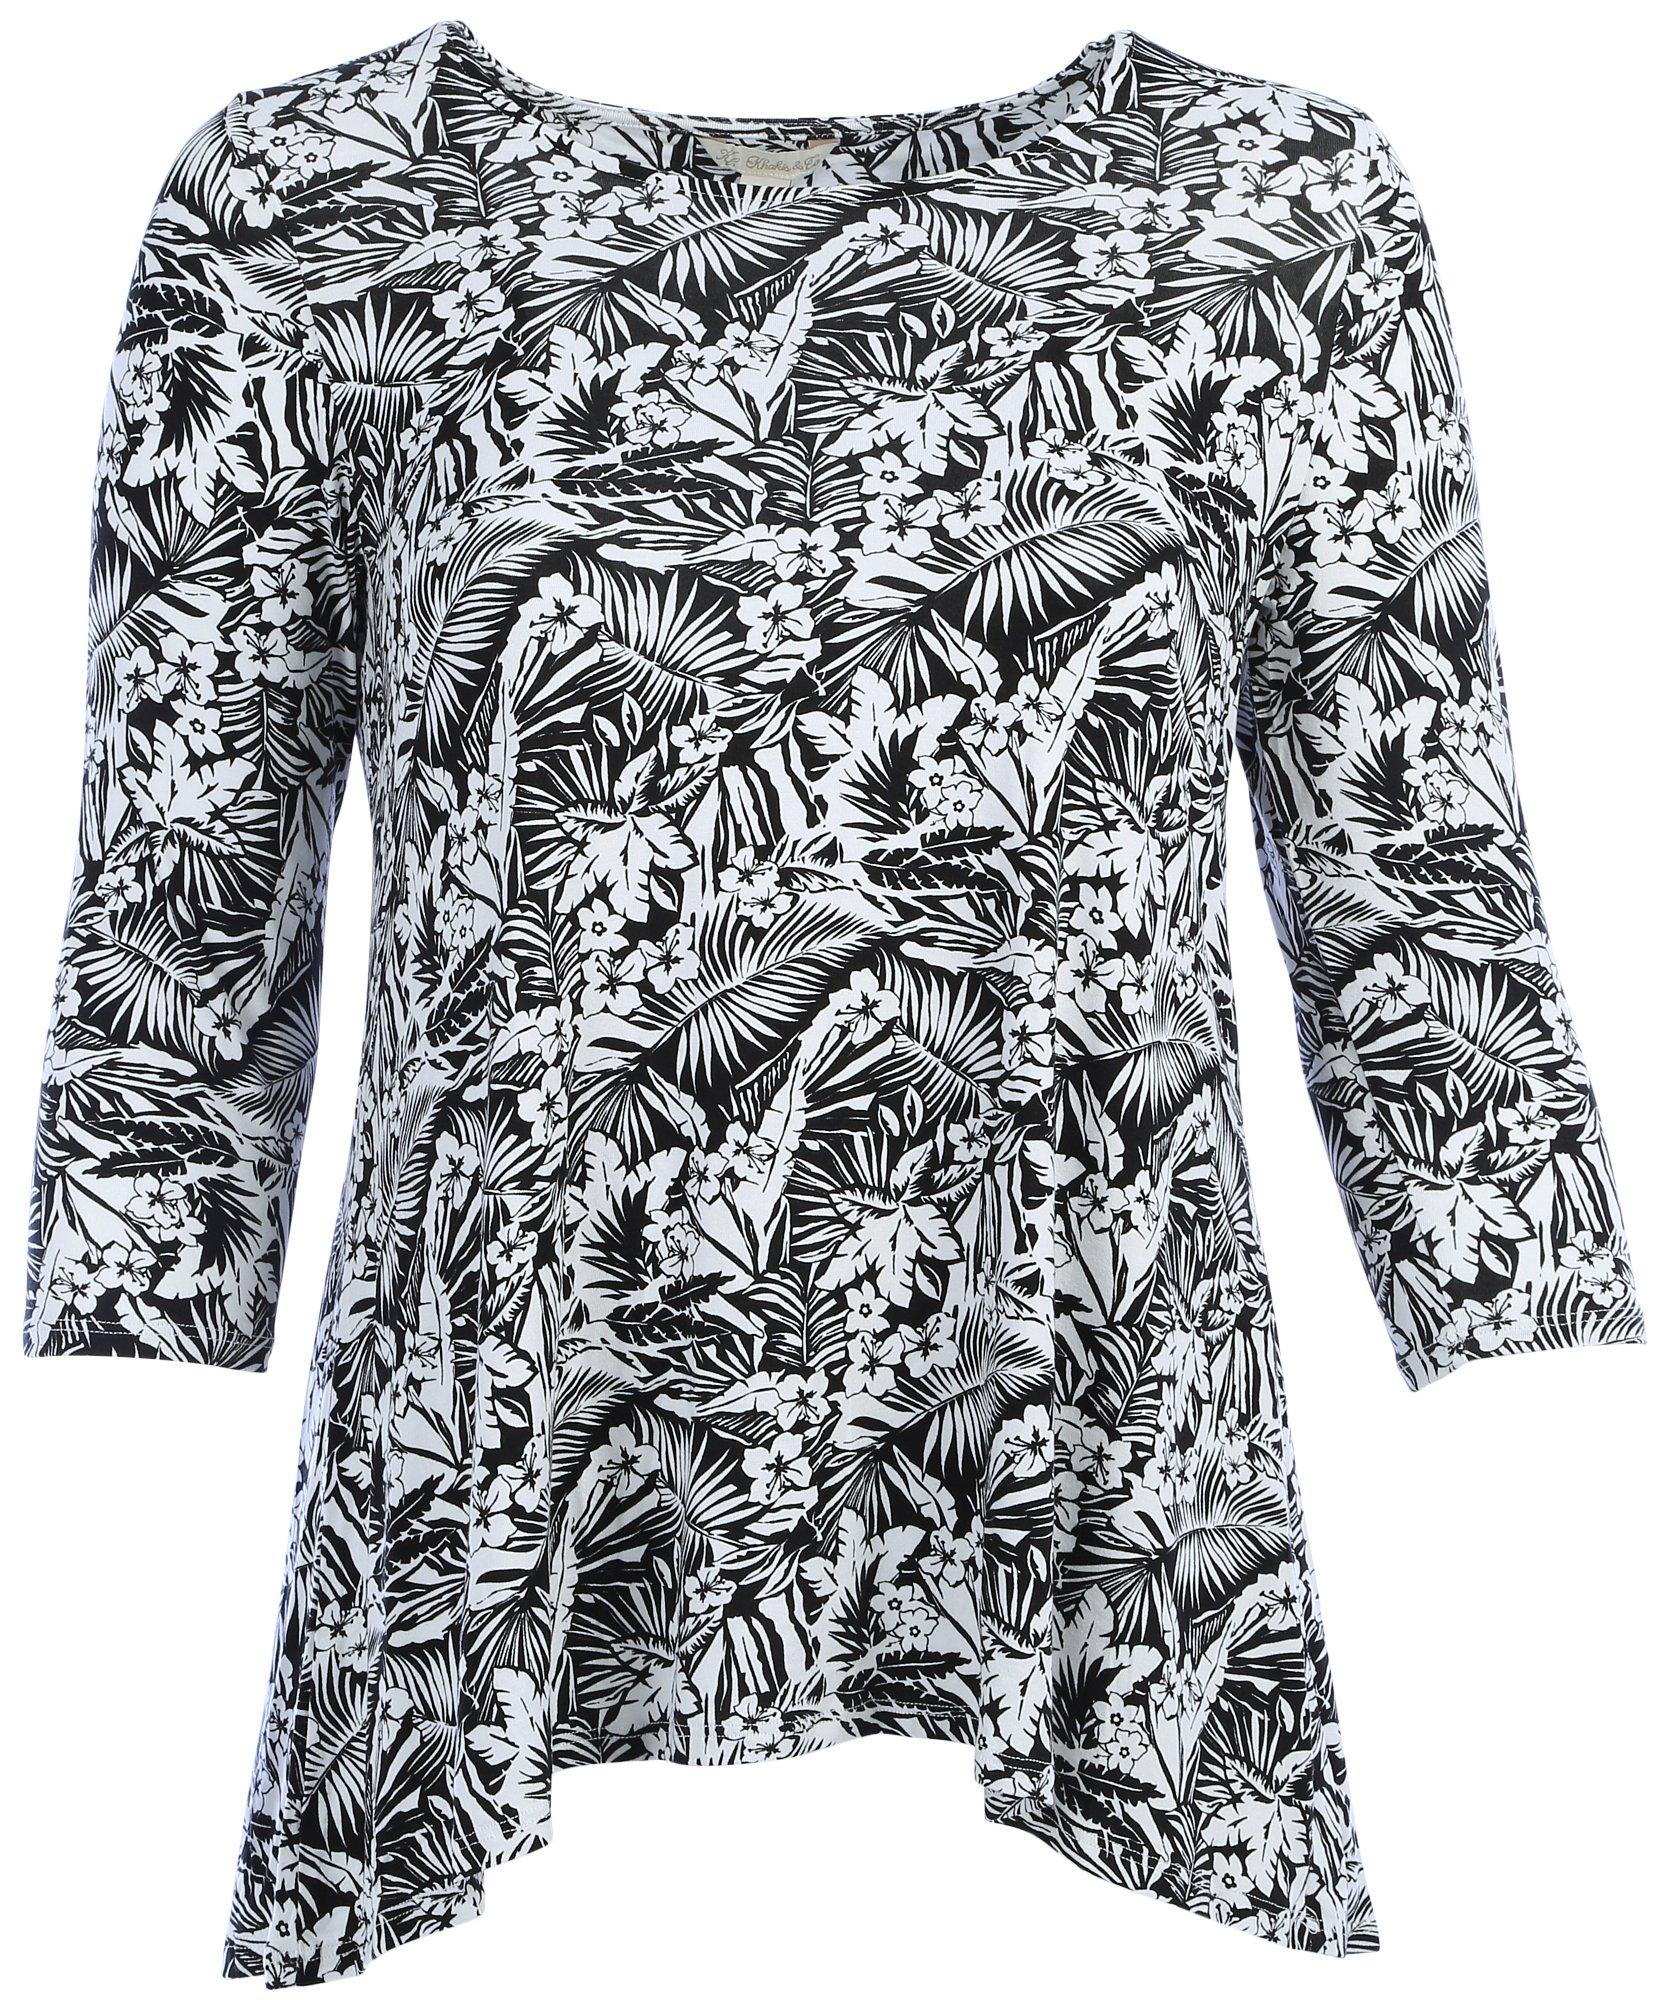 Khakis & Co Plus Tropical Print 3/4 Sleeve Top